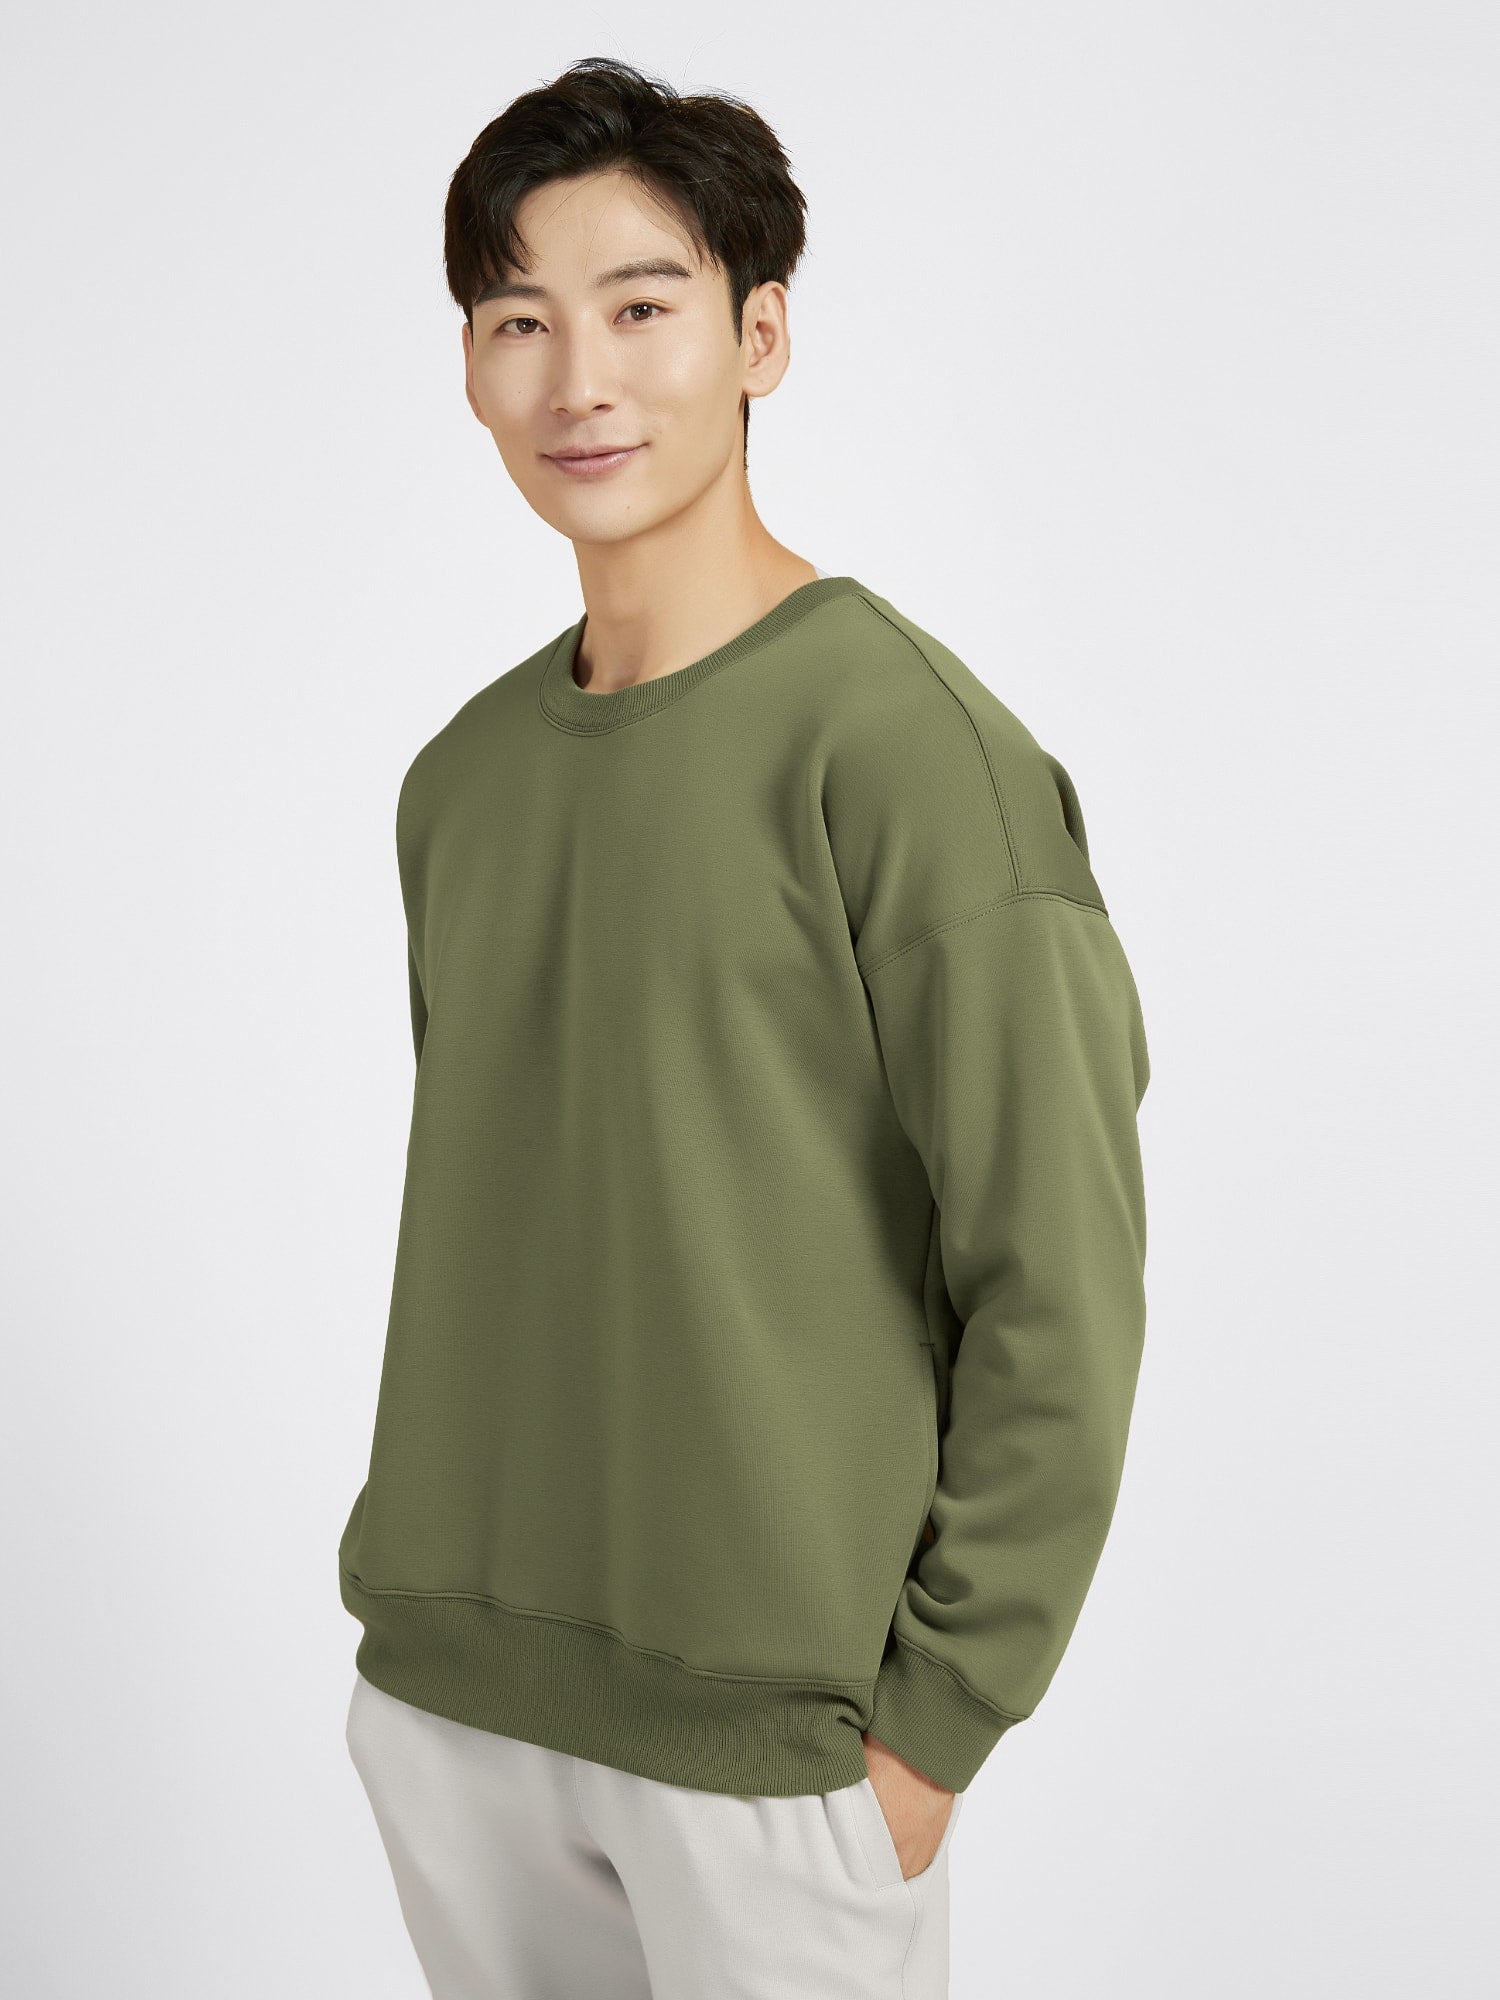 Cubby Sweater for Men｜Original Colors